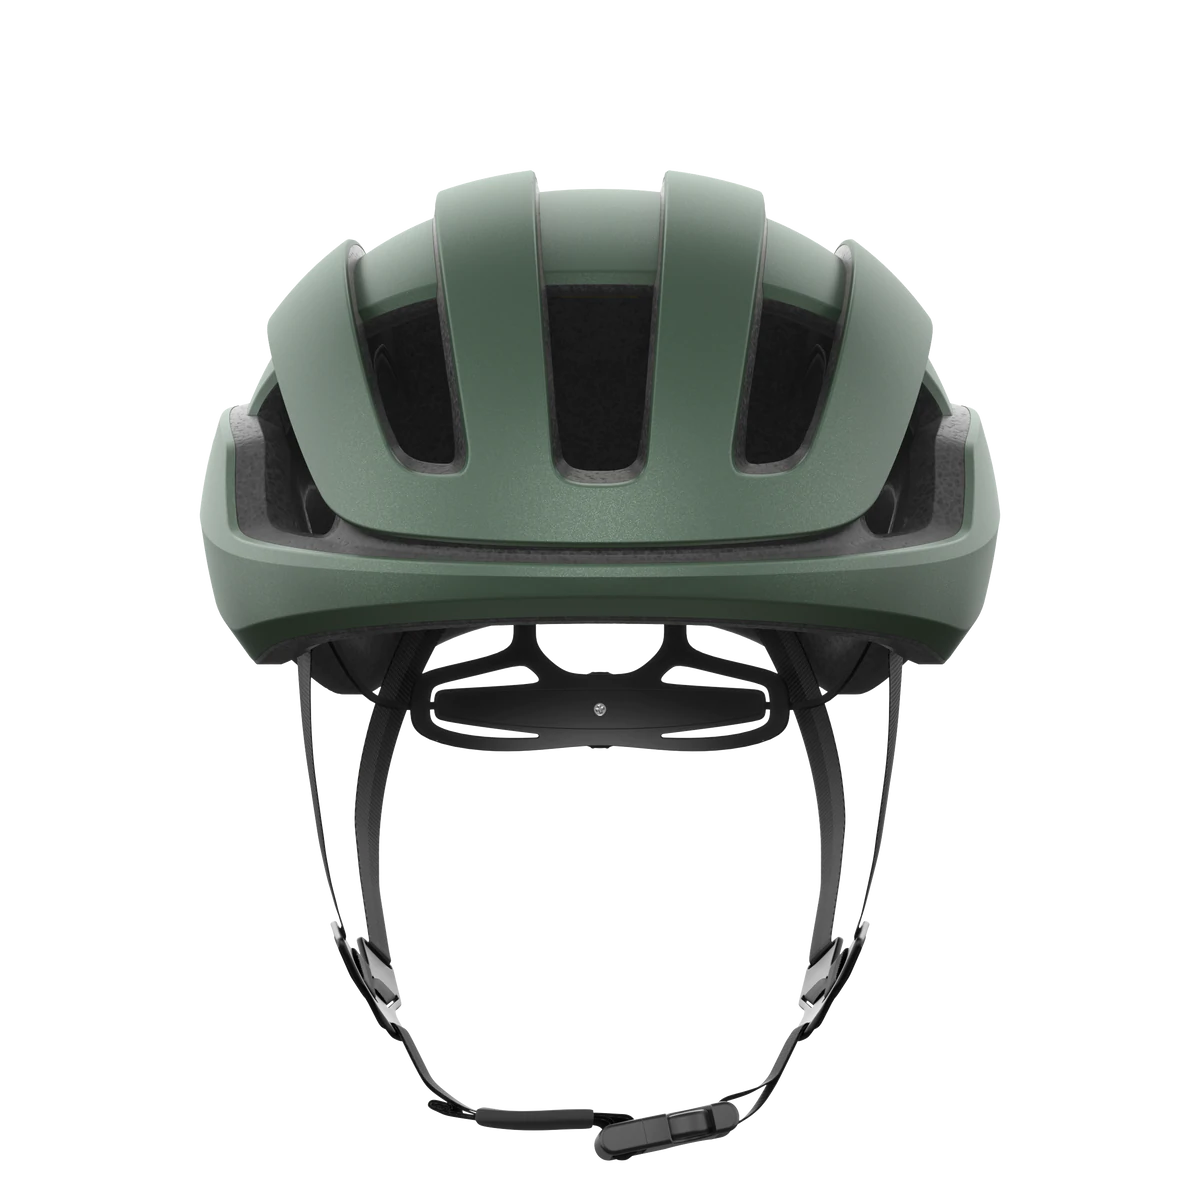 JCF公認ロードバイク用ヘルメット 10772-1454 オムネエアミップス アジアンフィット Omne Air Wf Mips Asian-fit - Ep Green Metall Matt